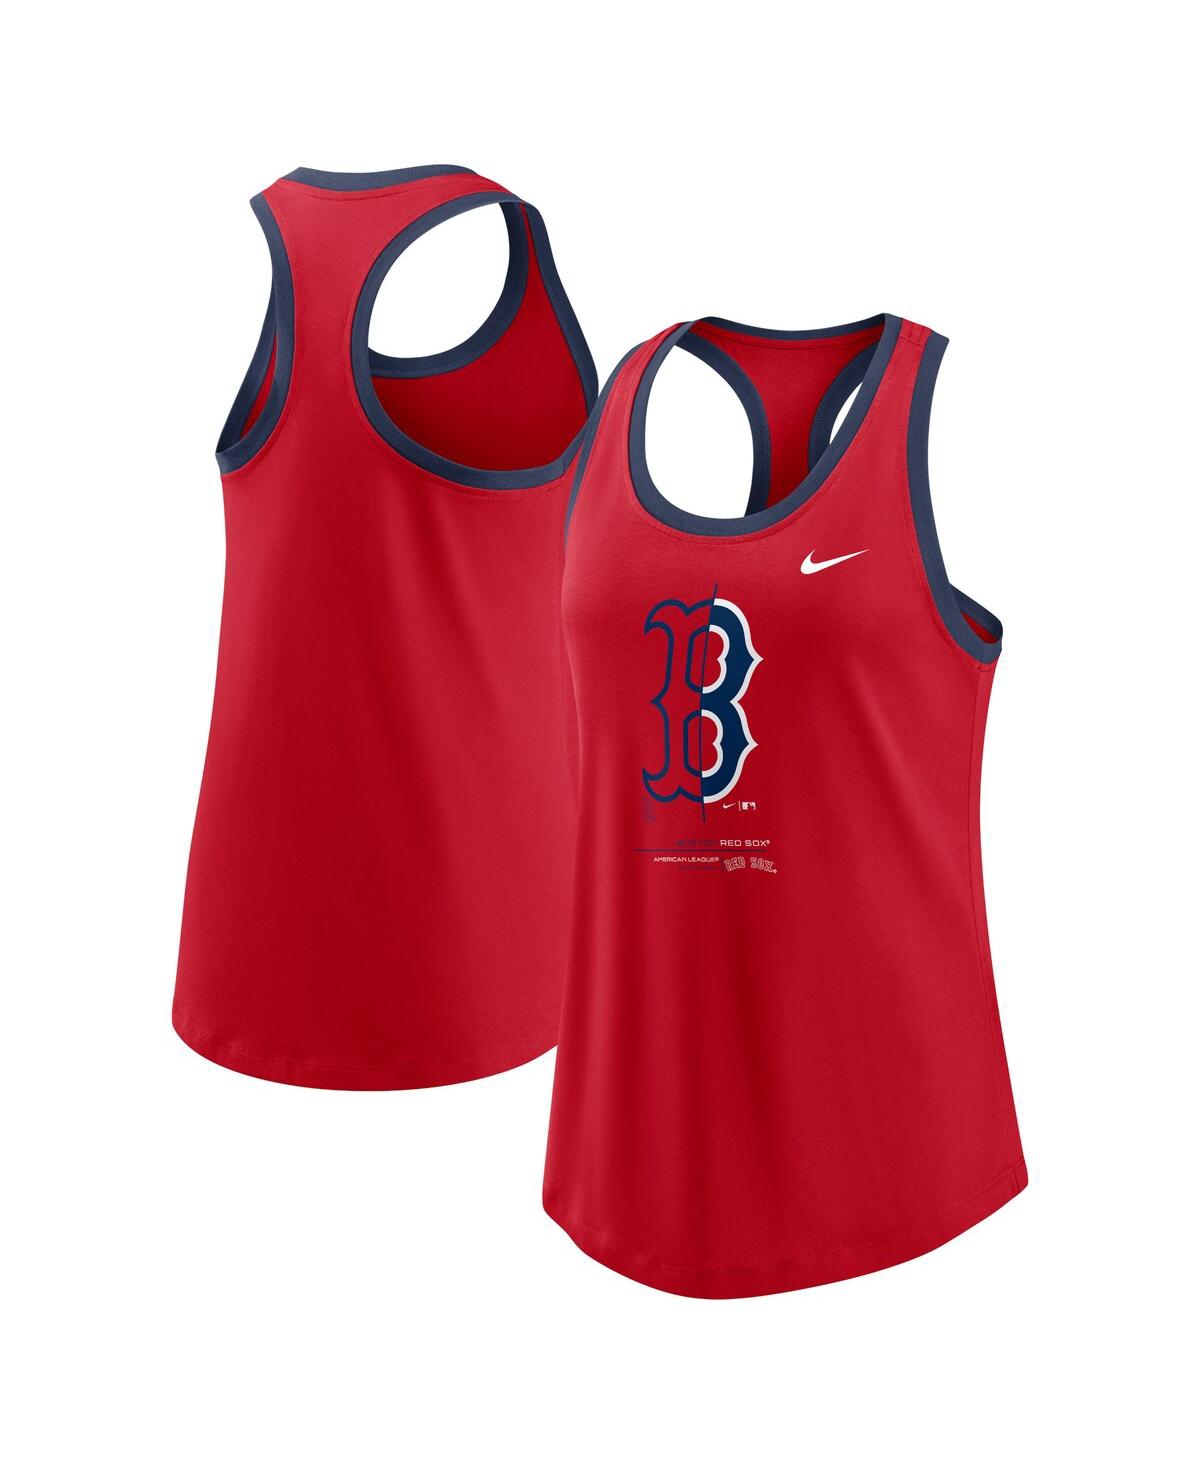 Women's Nike Red Boston Red Sox Tech Tank Top - Red